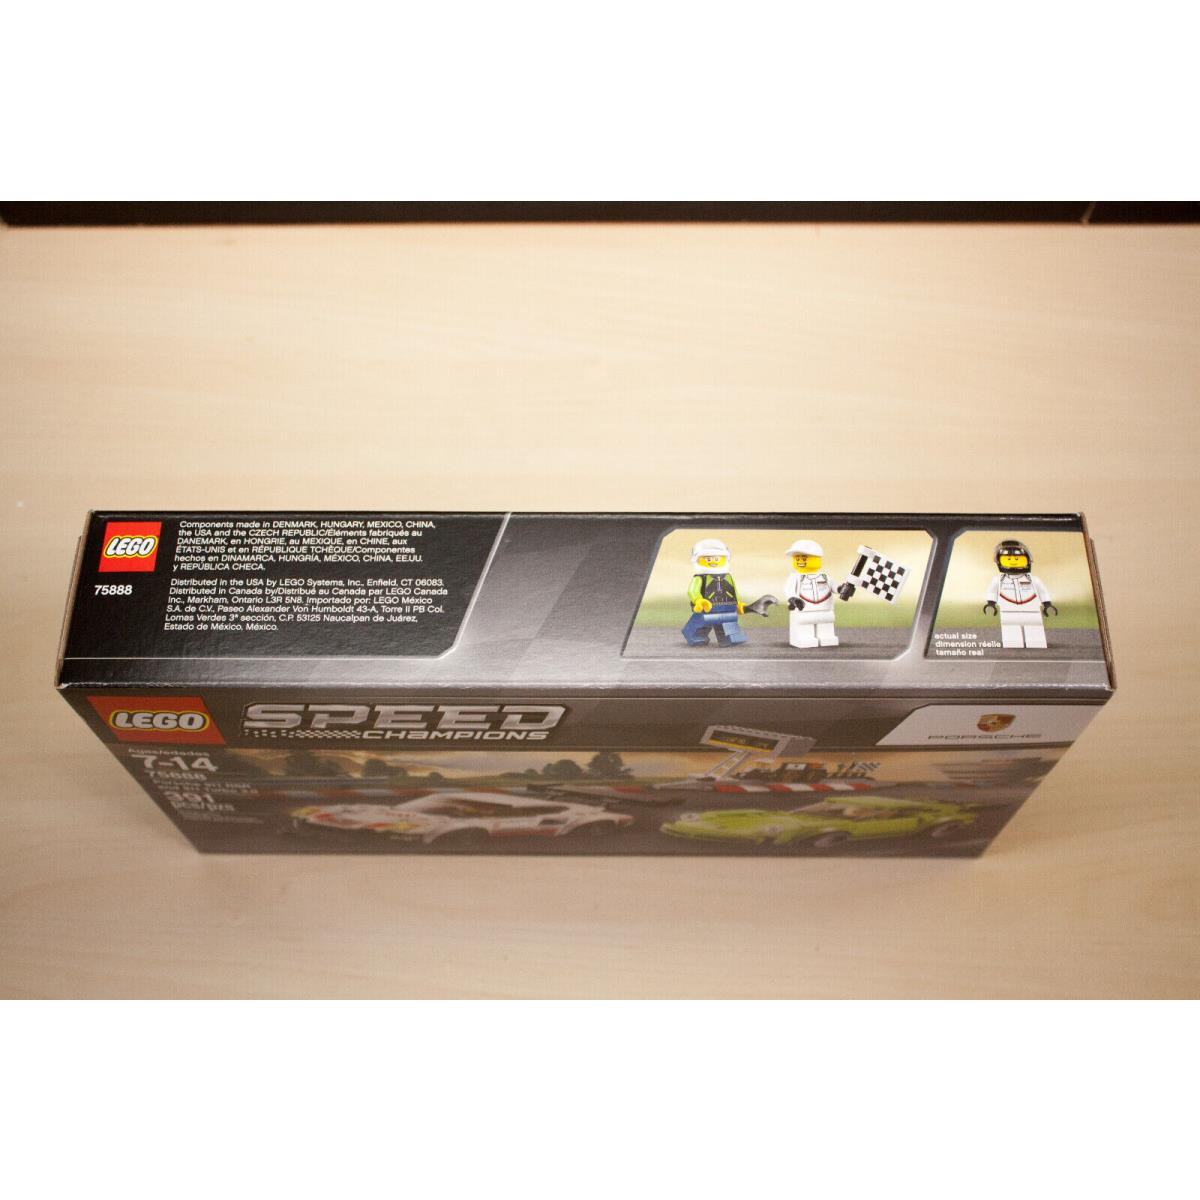 Lego Speed Champions Porsche 911 Rsr and 911 Turbo 3.0 75888 Box